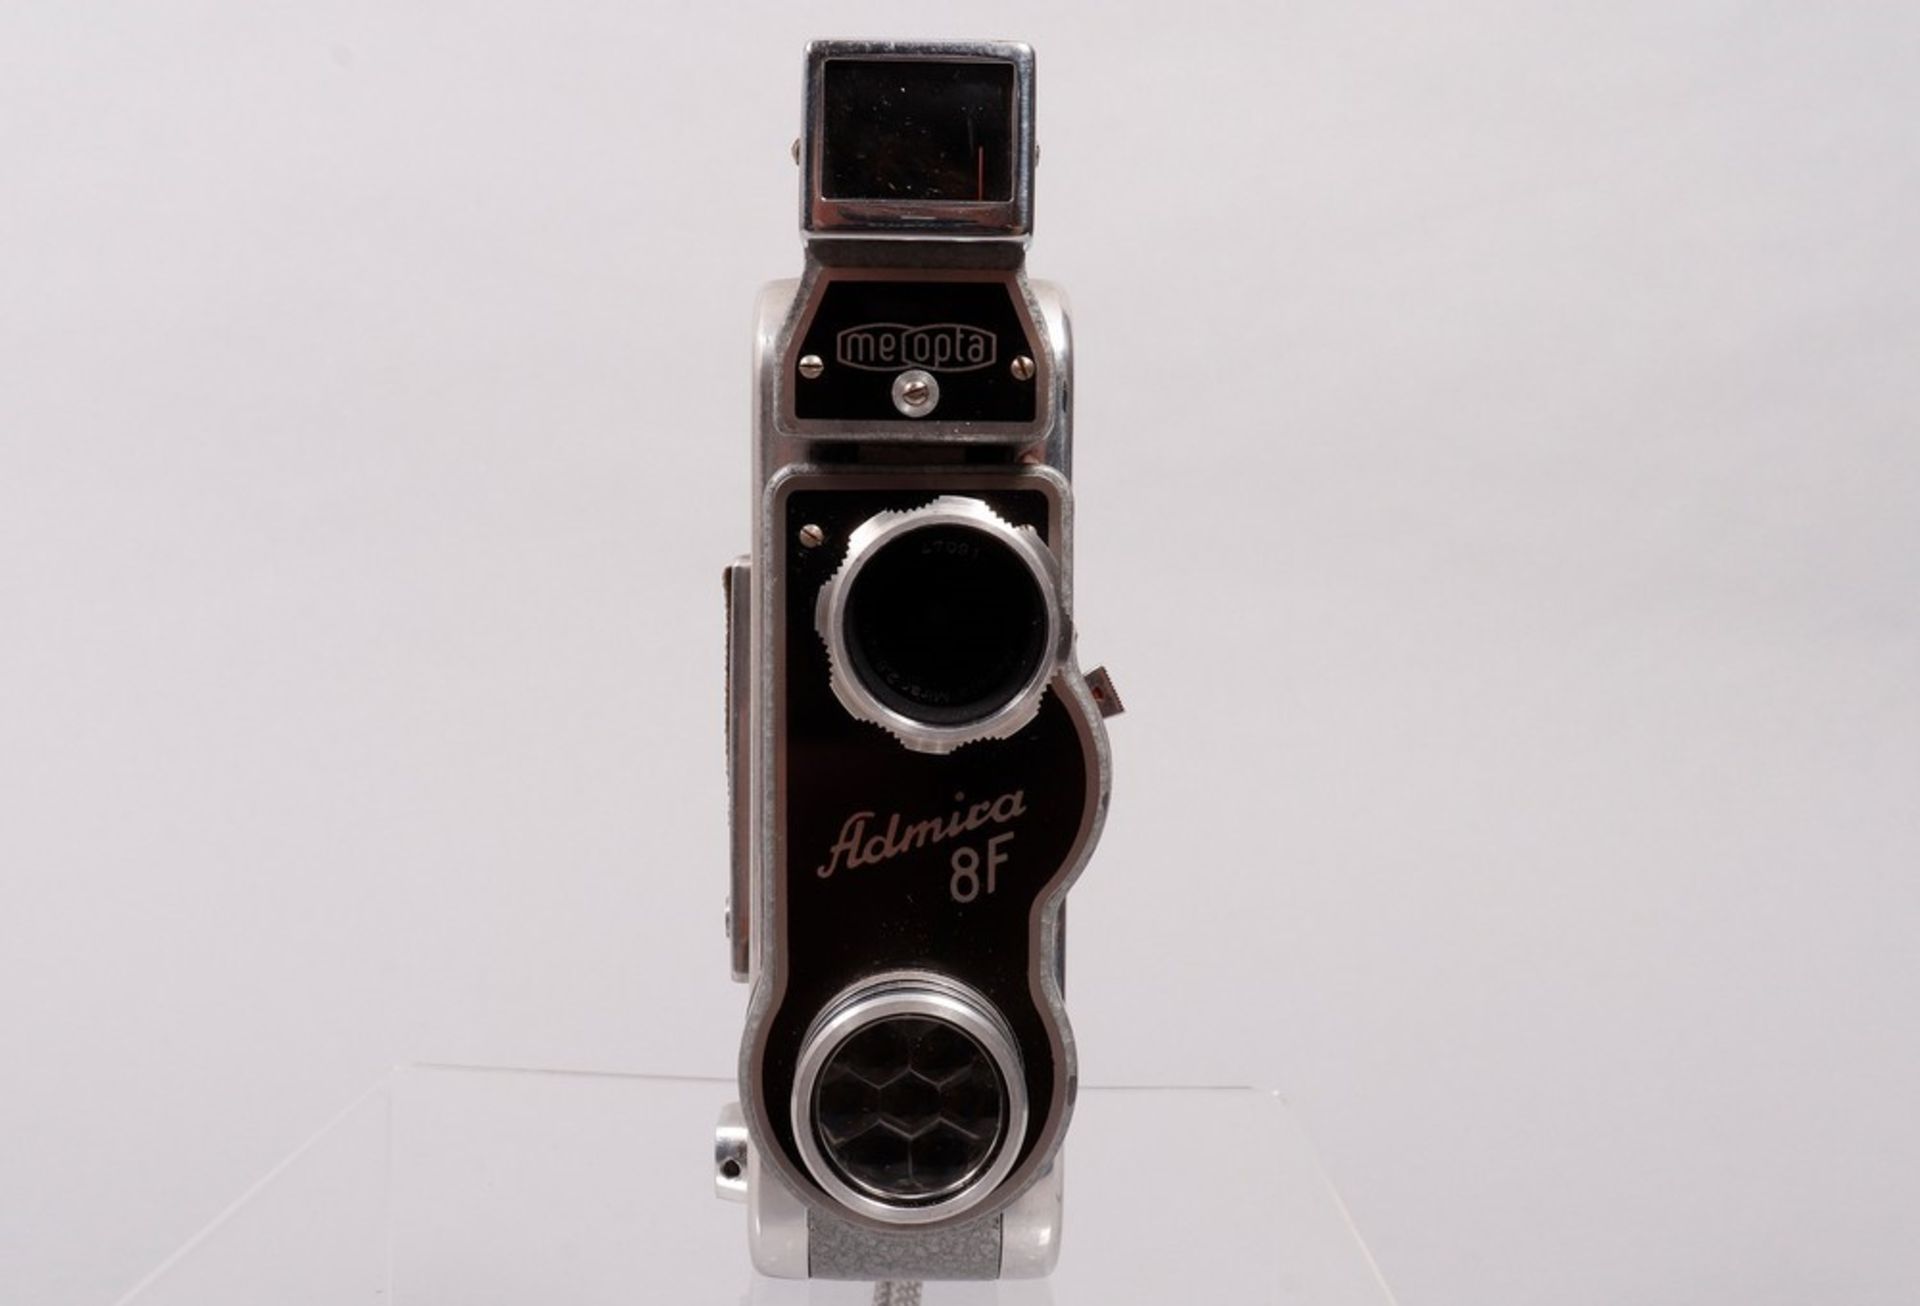 5 8mm film cameras, Bauer / Meopta / Zeiss Ikon, 1st half 20th C. - Image 4 of 4